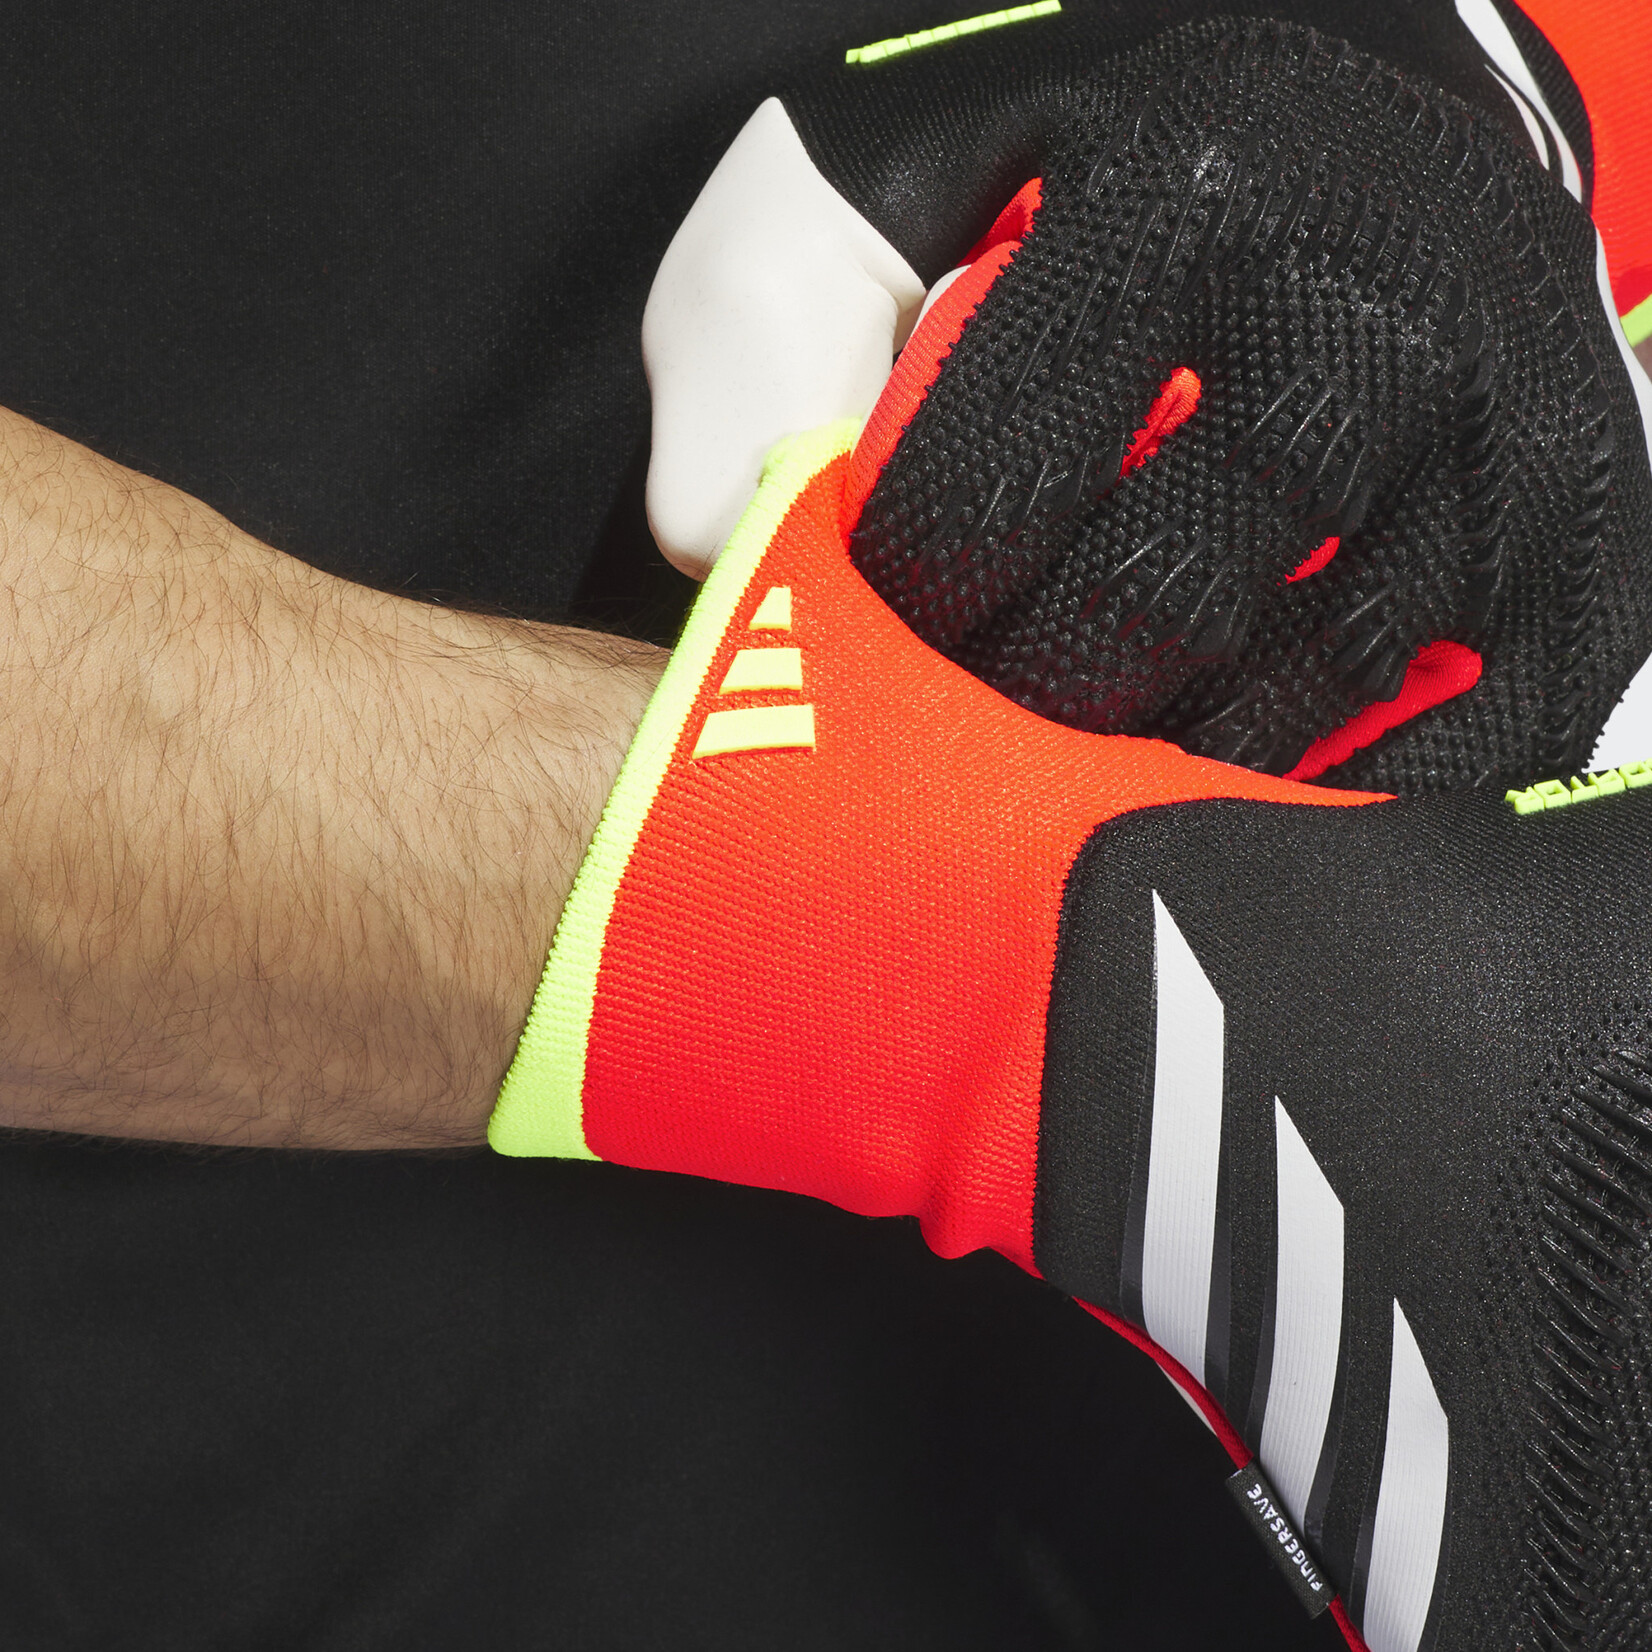 Adidas Predator Pro Fingersave Goalkeeper Gloves Black / Solar Red / Solar Yellow